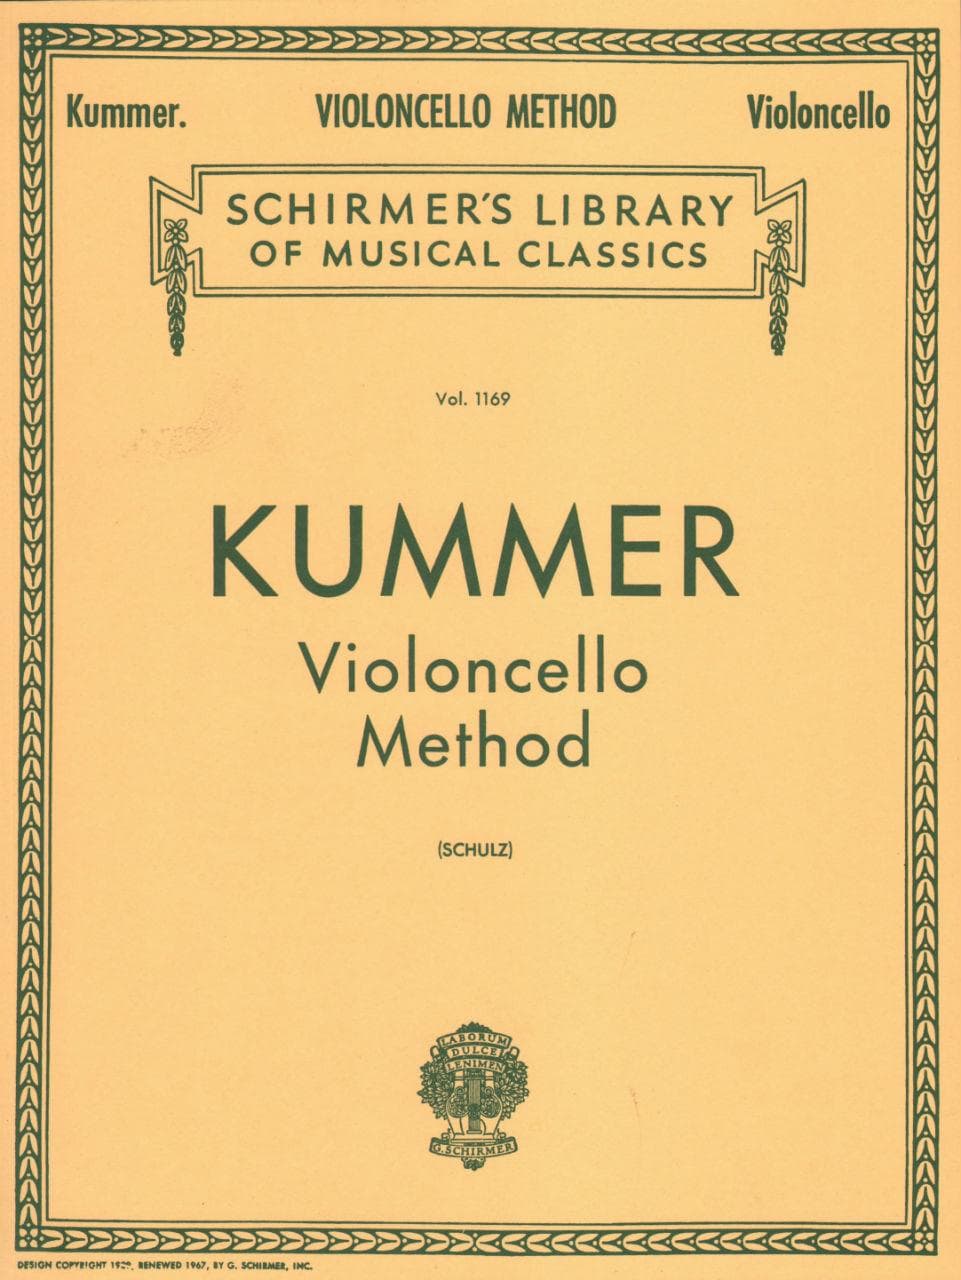 Kummer, FA - Violoncello Method, Op 60 - Cello solo - edited by Leo Schulz - G Schirmer Edition